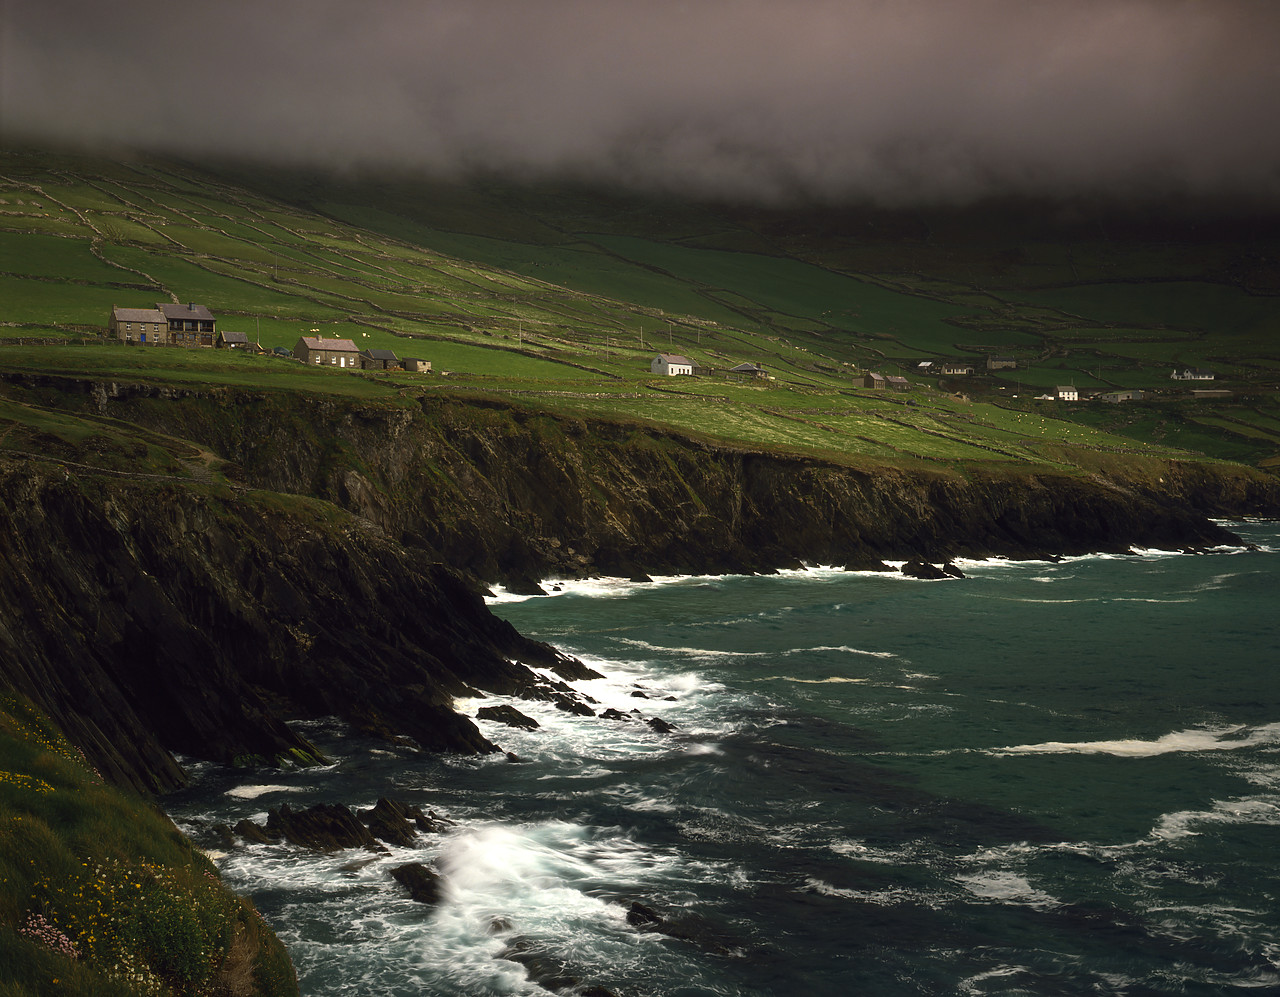 #955368-1 - Coastline at Slea Head, Dingle Peninsula, Co. Kerry, Southern Ireland